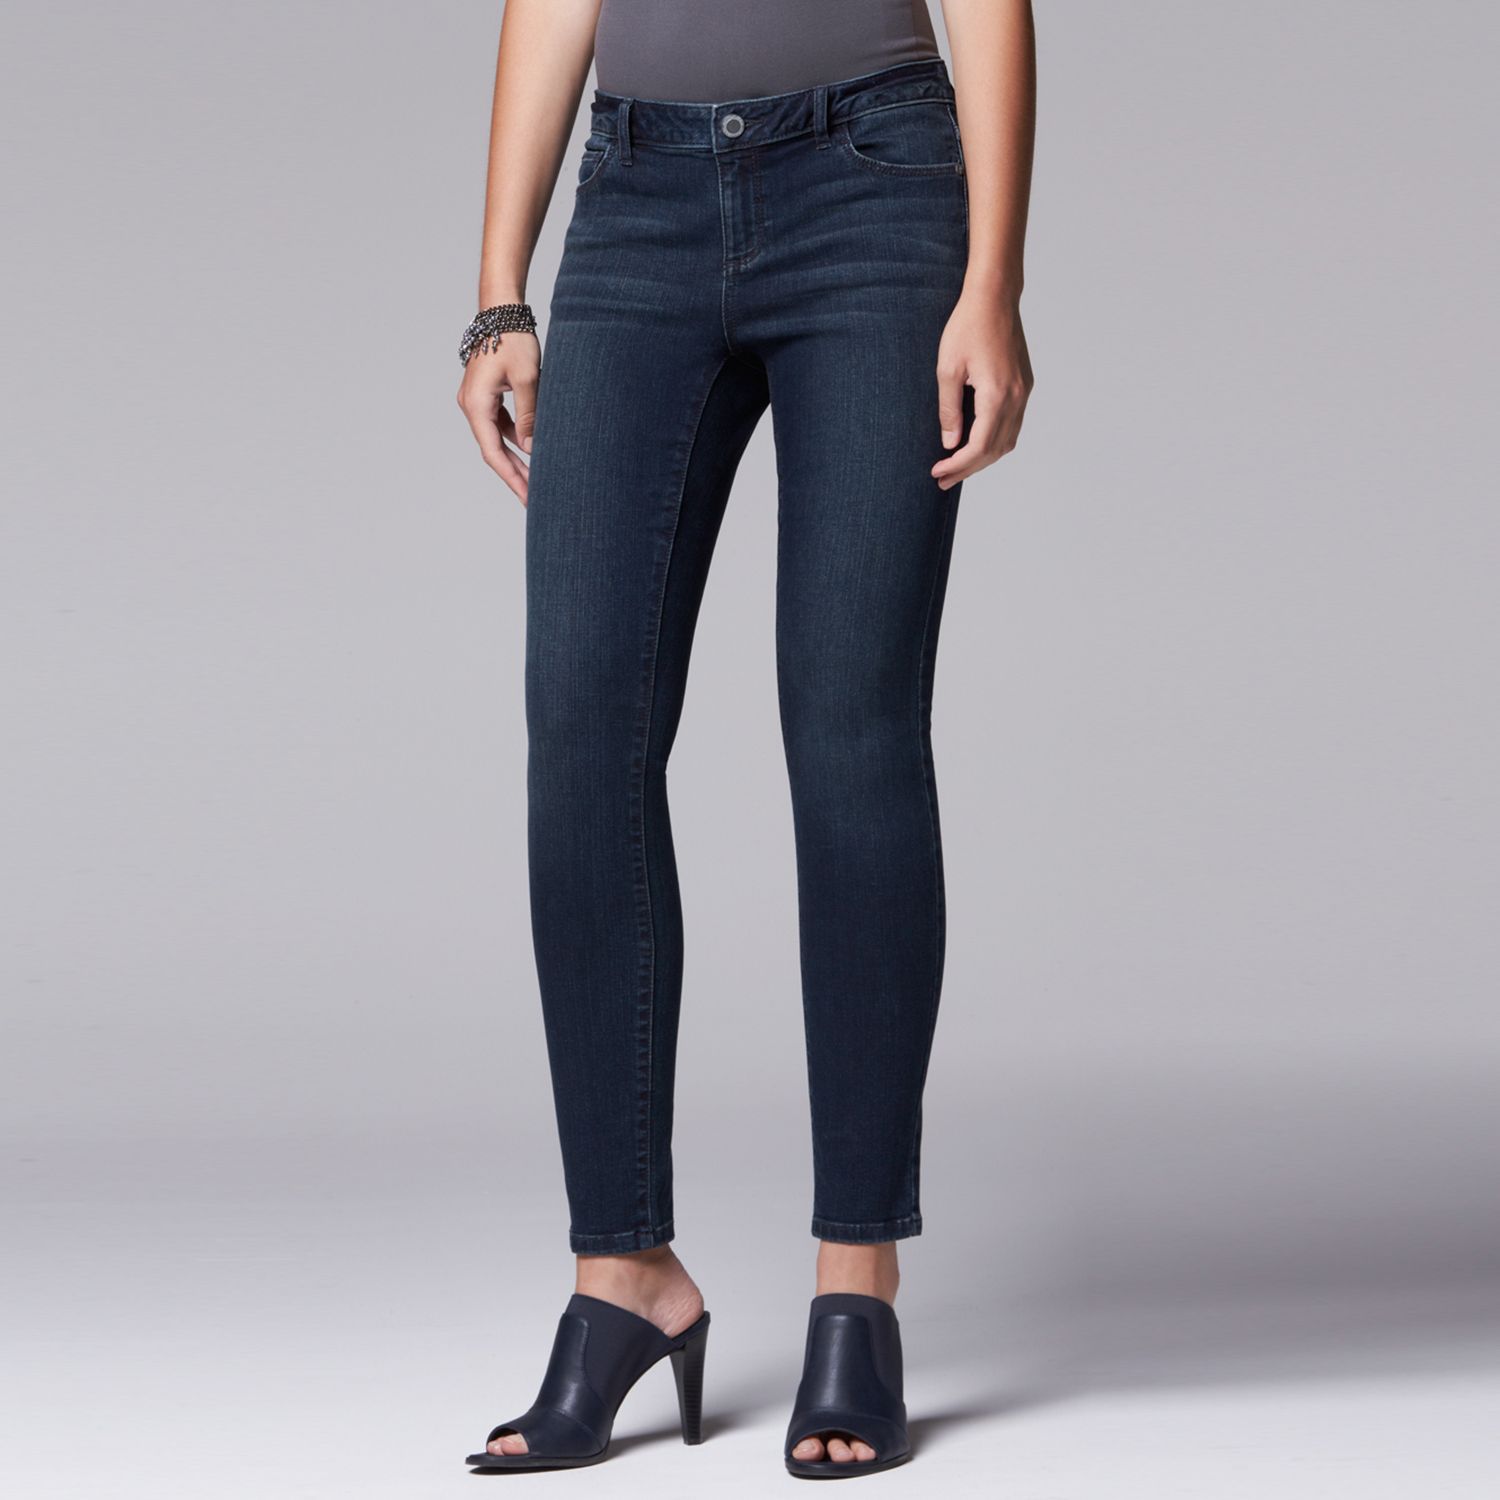 Simply Vera Vera Wang Super Skinny Jeans